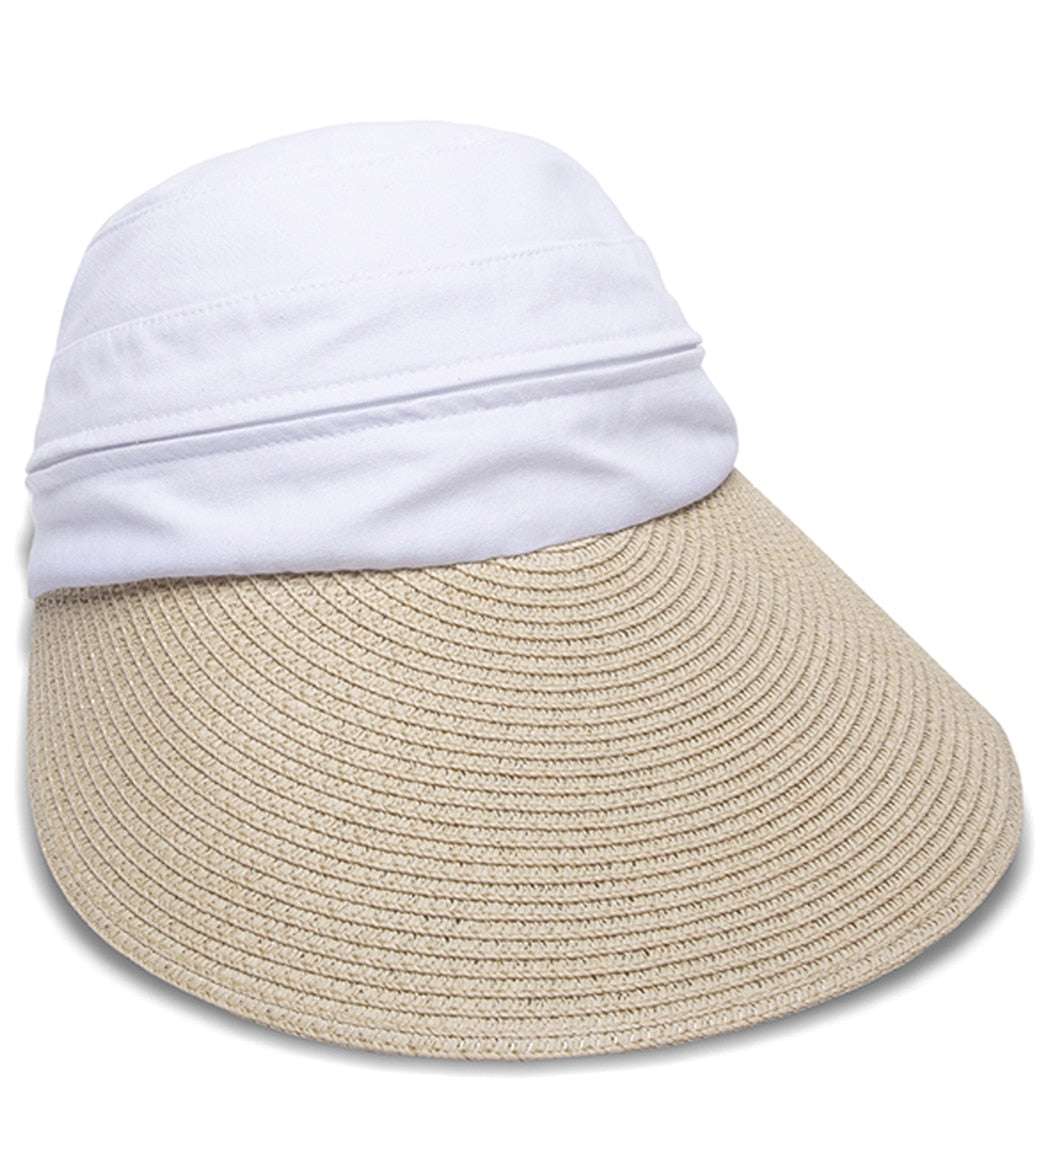 Physician Endorsed Women's Bimini Hat - Natural/White Adjustable - Swimoutlet.com